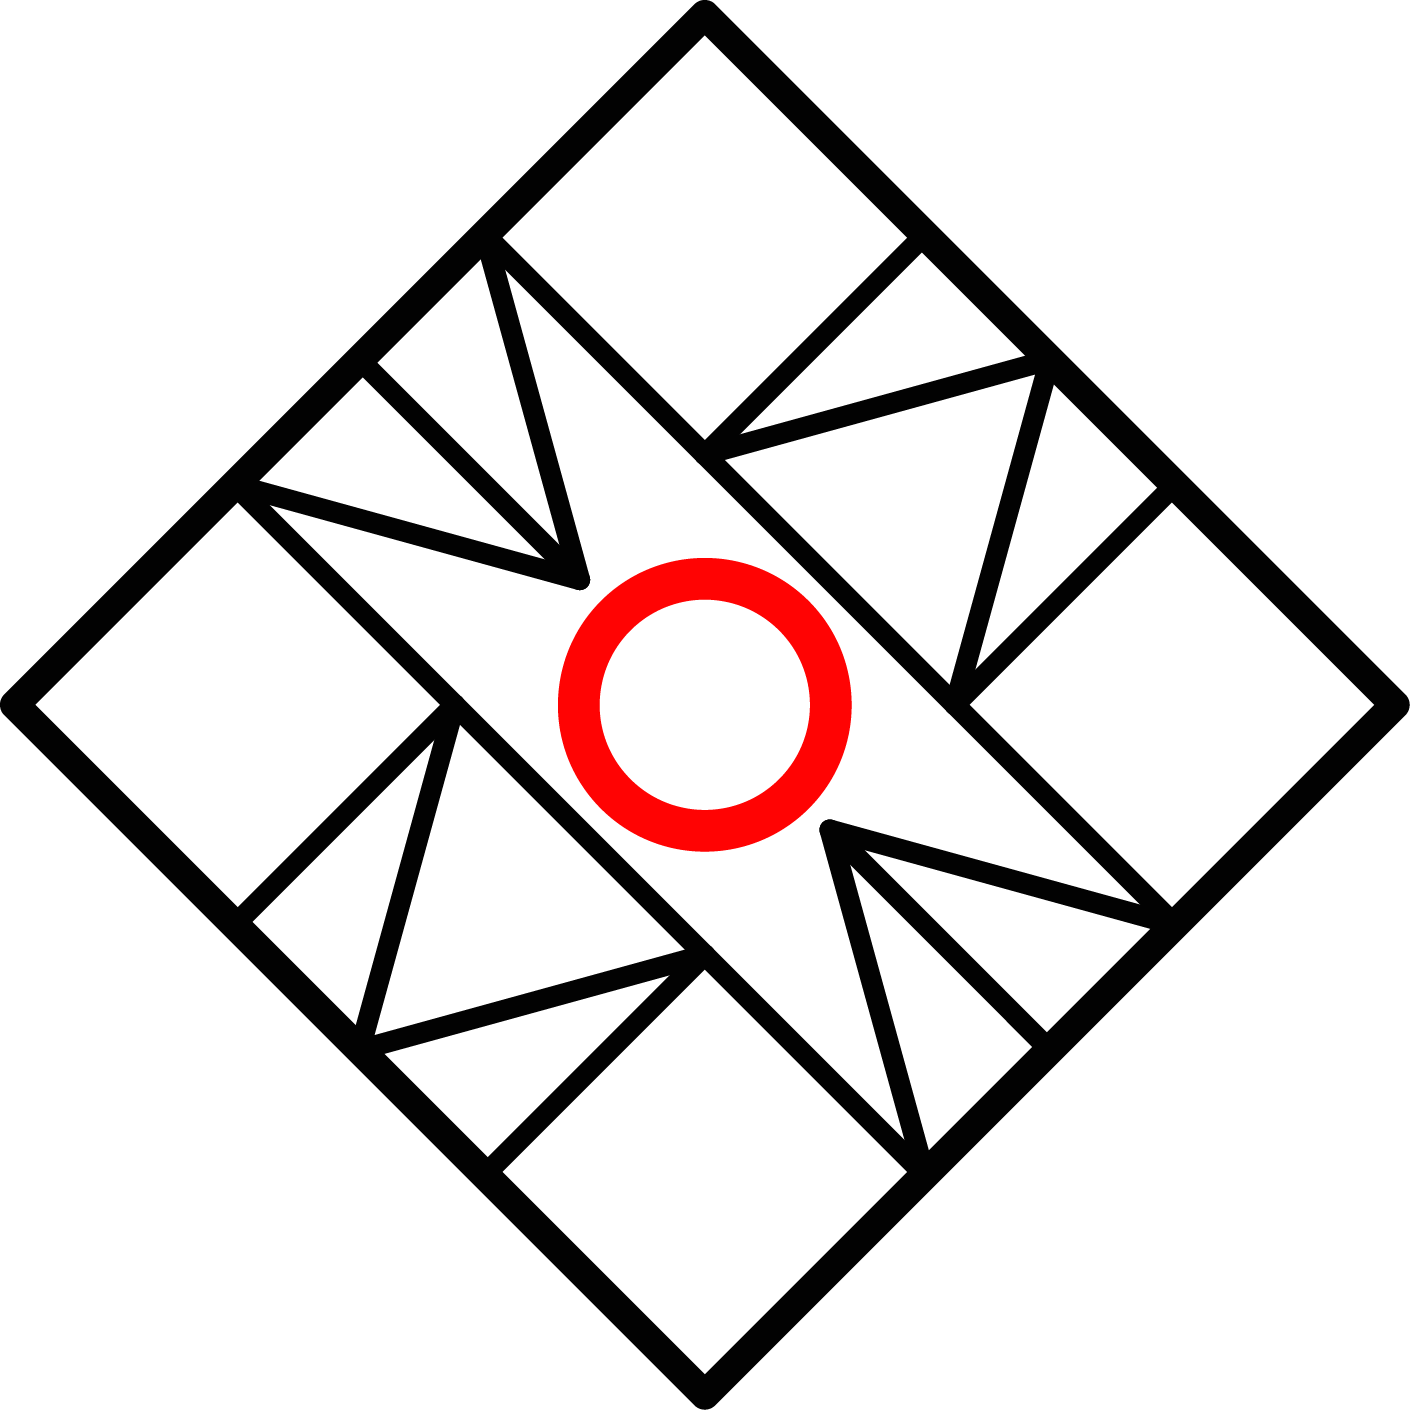 The National Organization of Minority Architecture Students (NOMAS) logo